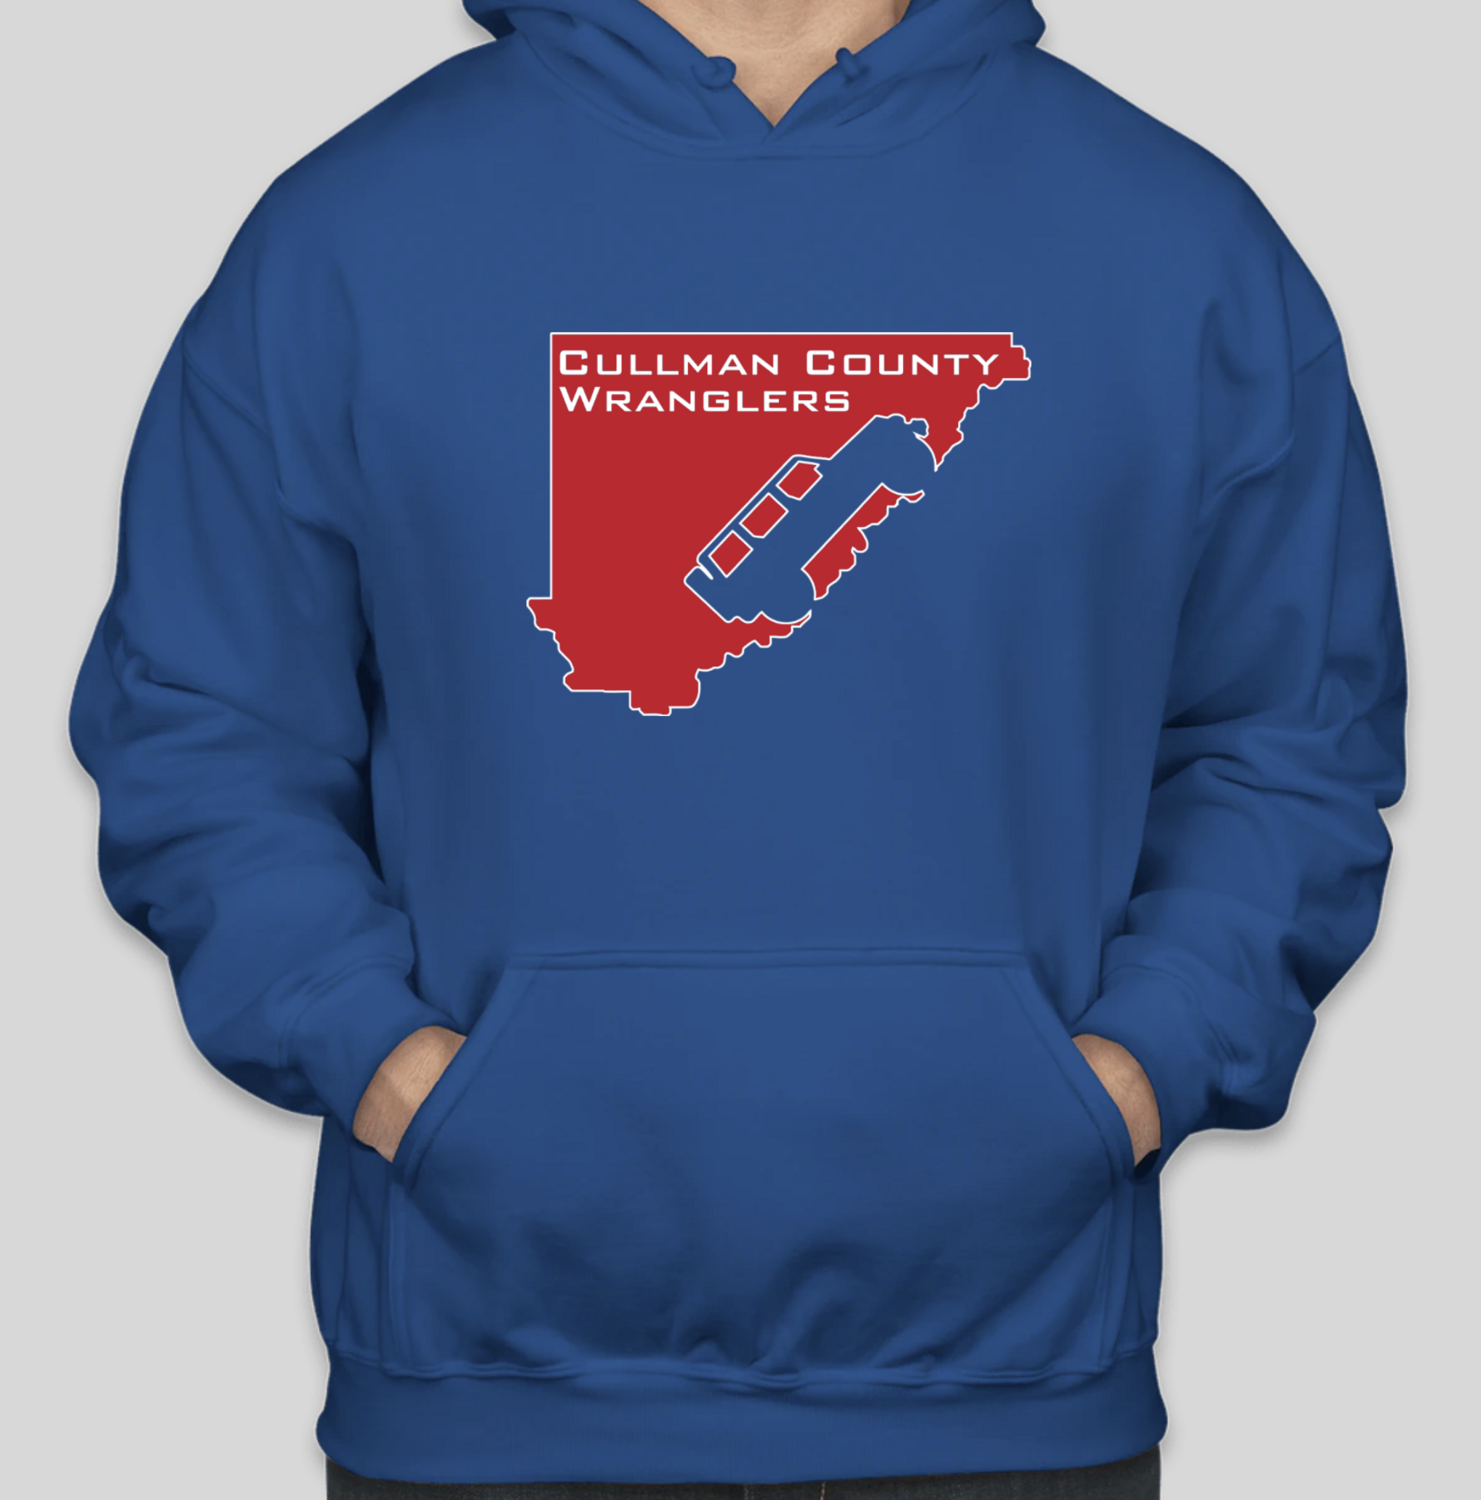 Cullman County Wranglers Hooded Sweatshirt - Red & Royal Blue